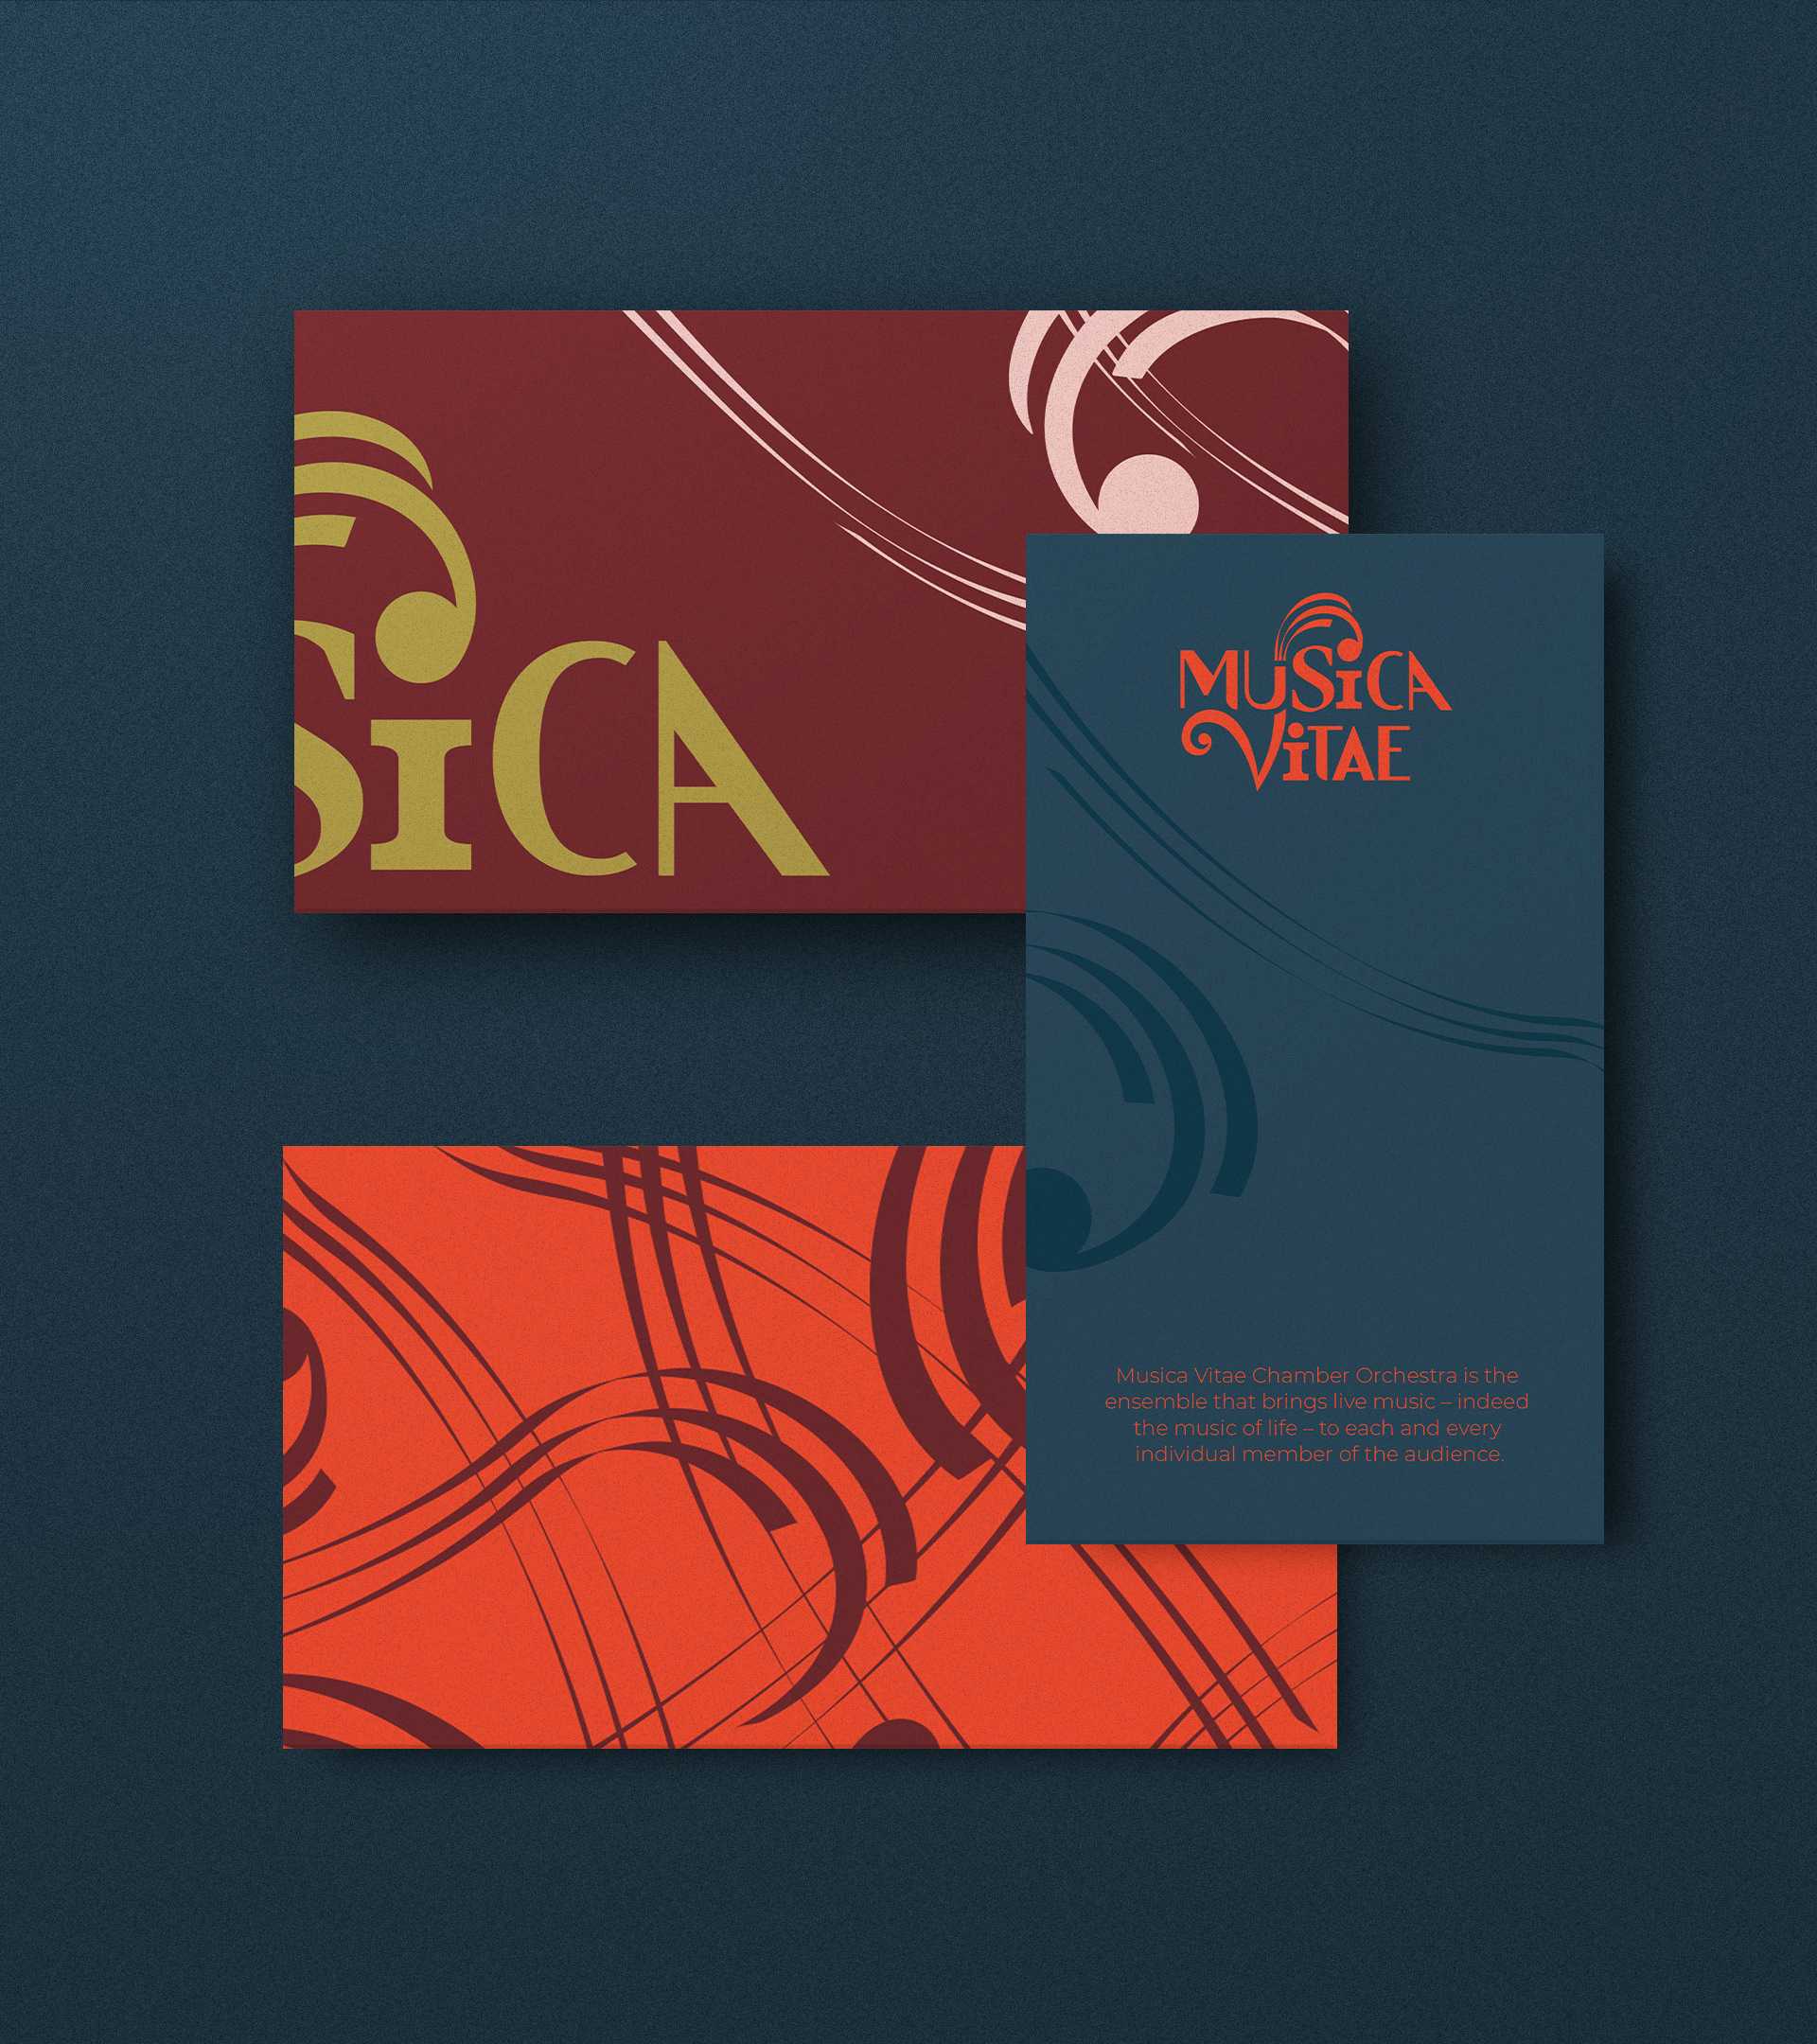 Musica Vitae card mockup designed by Studio Poi